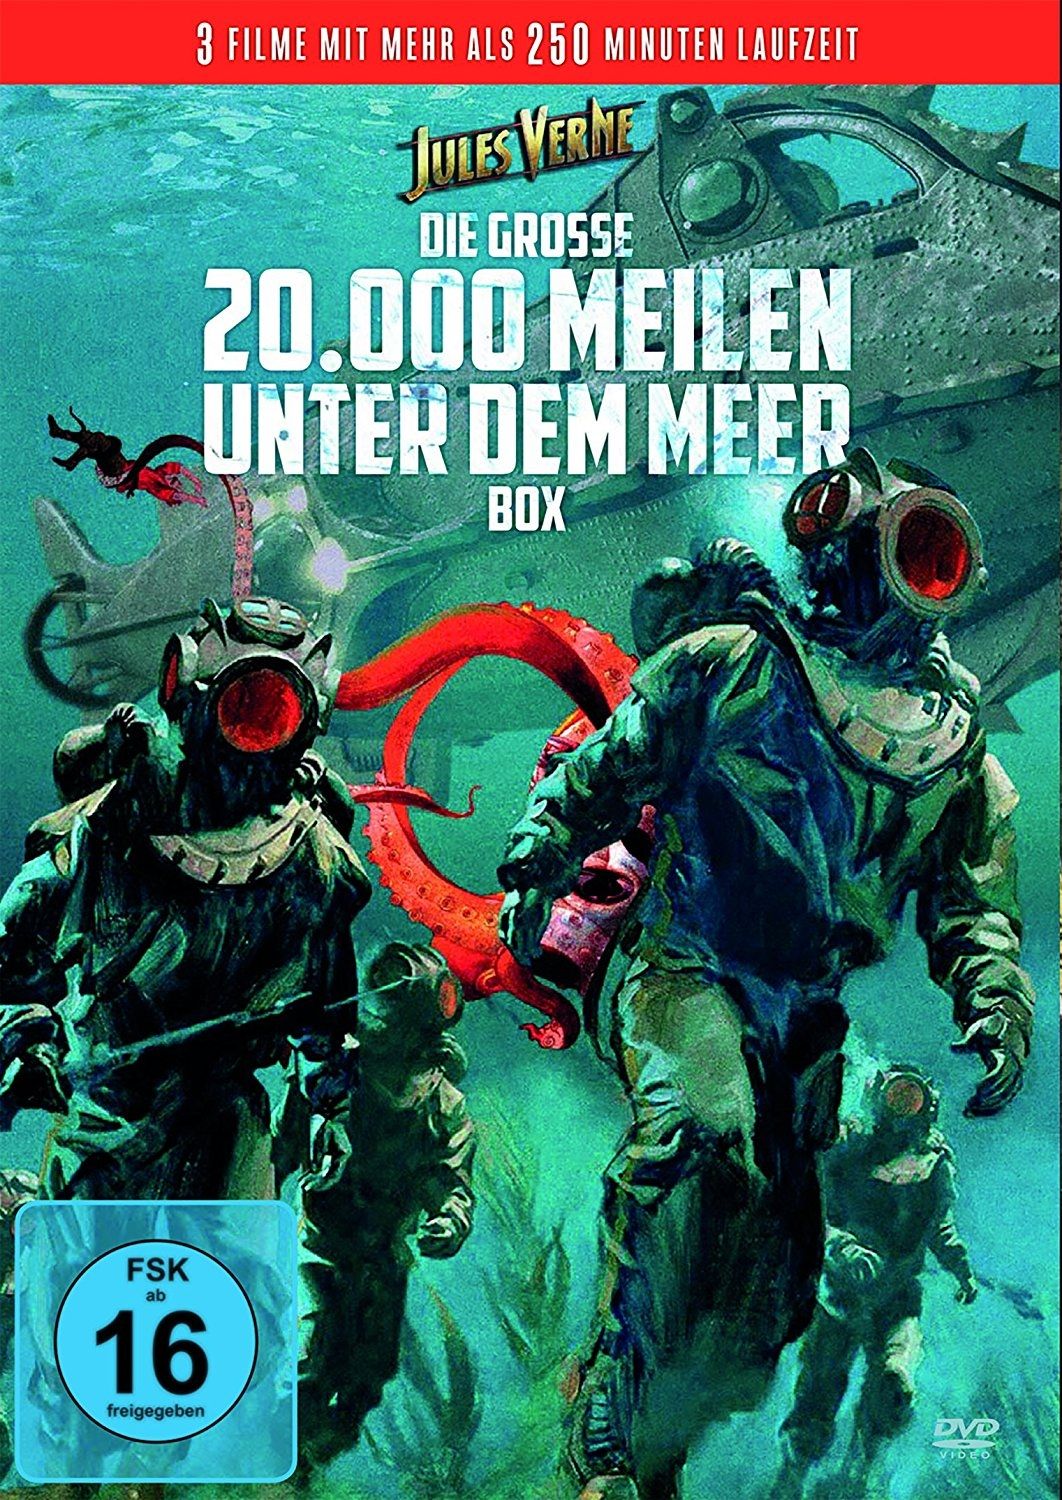 20.000 Meilen unter dem Meer (2007) / 20.000 Meilen unter dem Meer (1916) / Die Reise zum prähistorischen Planeten (Jules Verne - Die grosse 20.000 Meilen unter dem Meer Box)